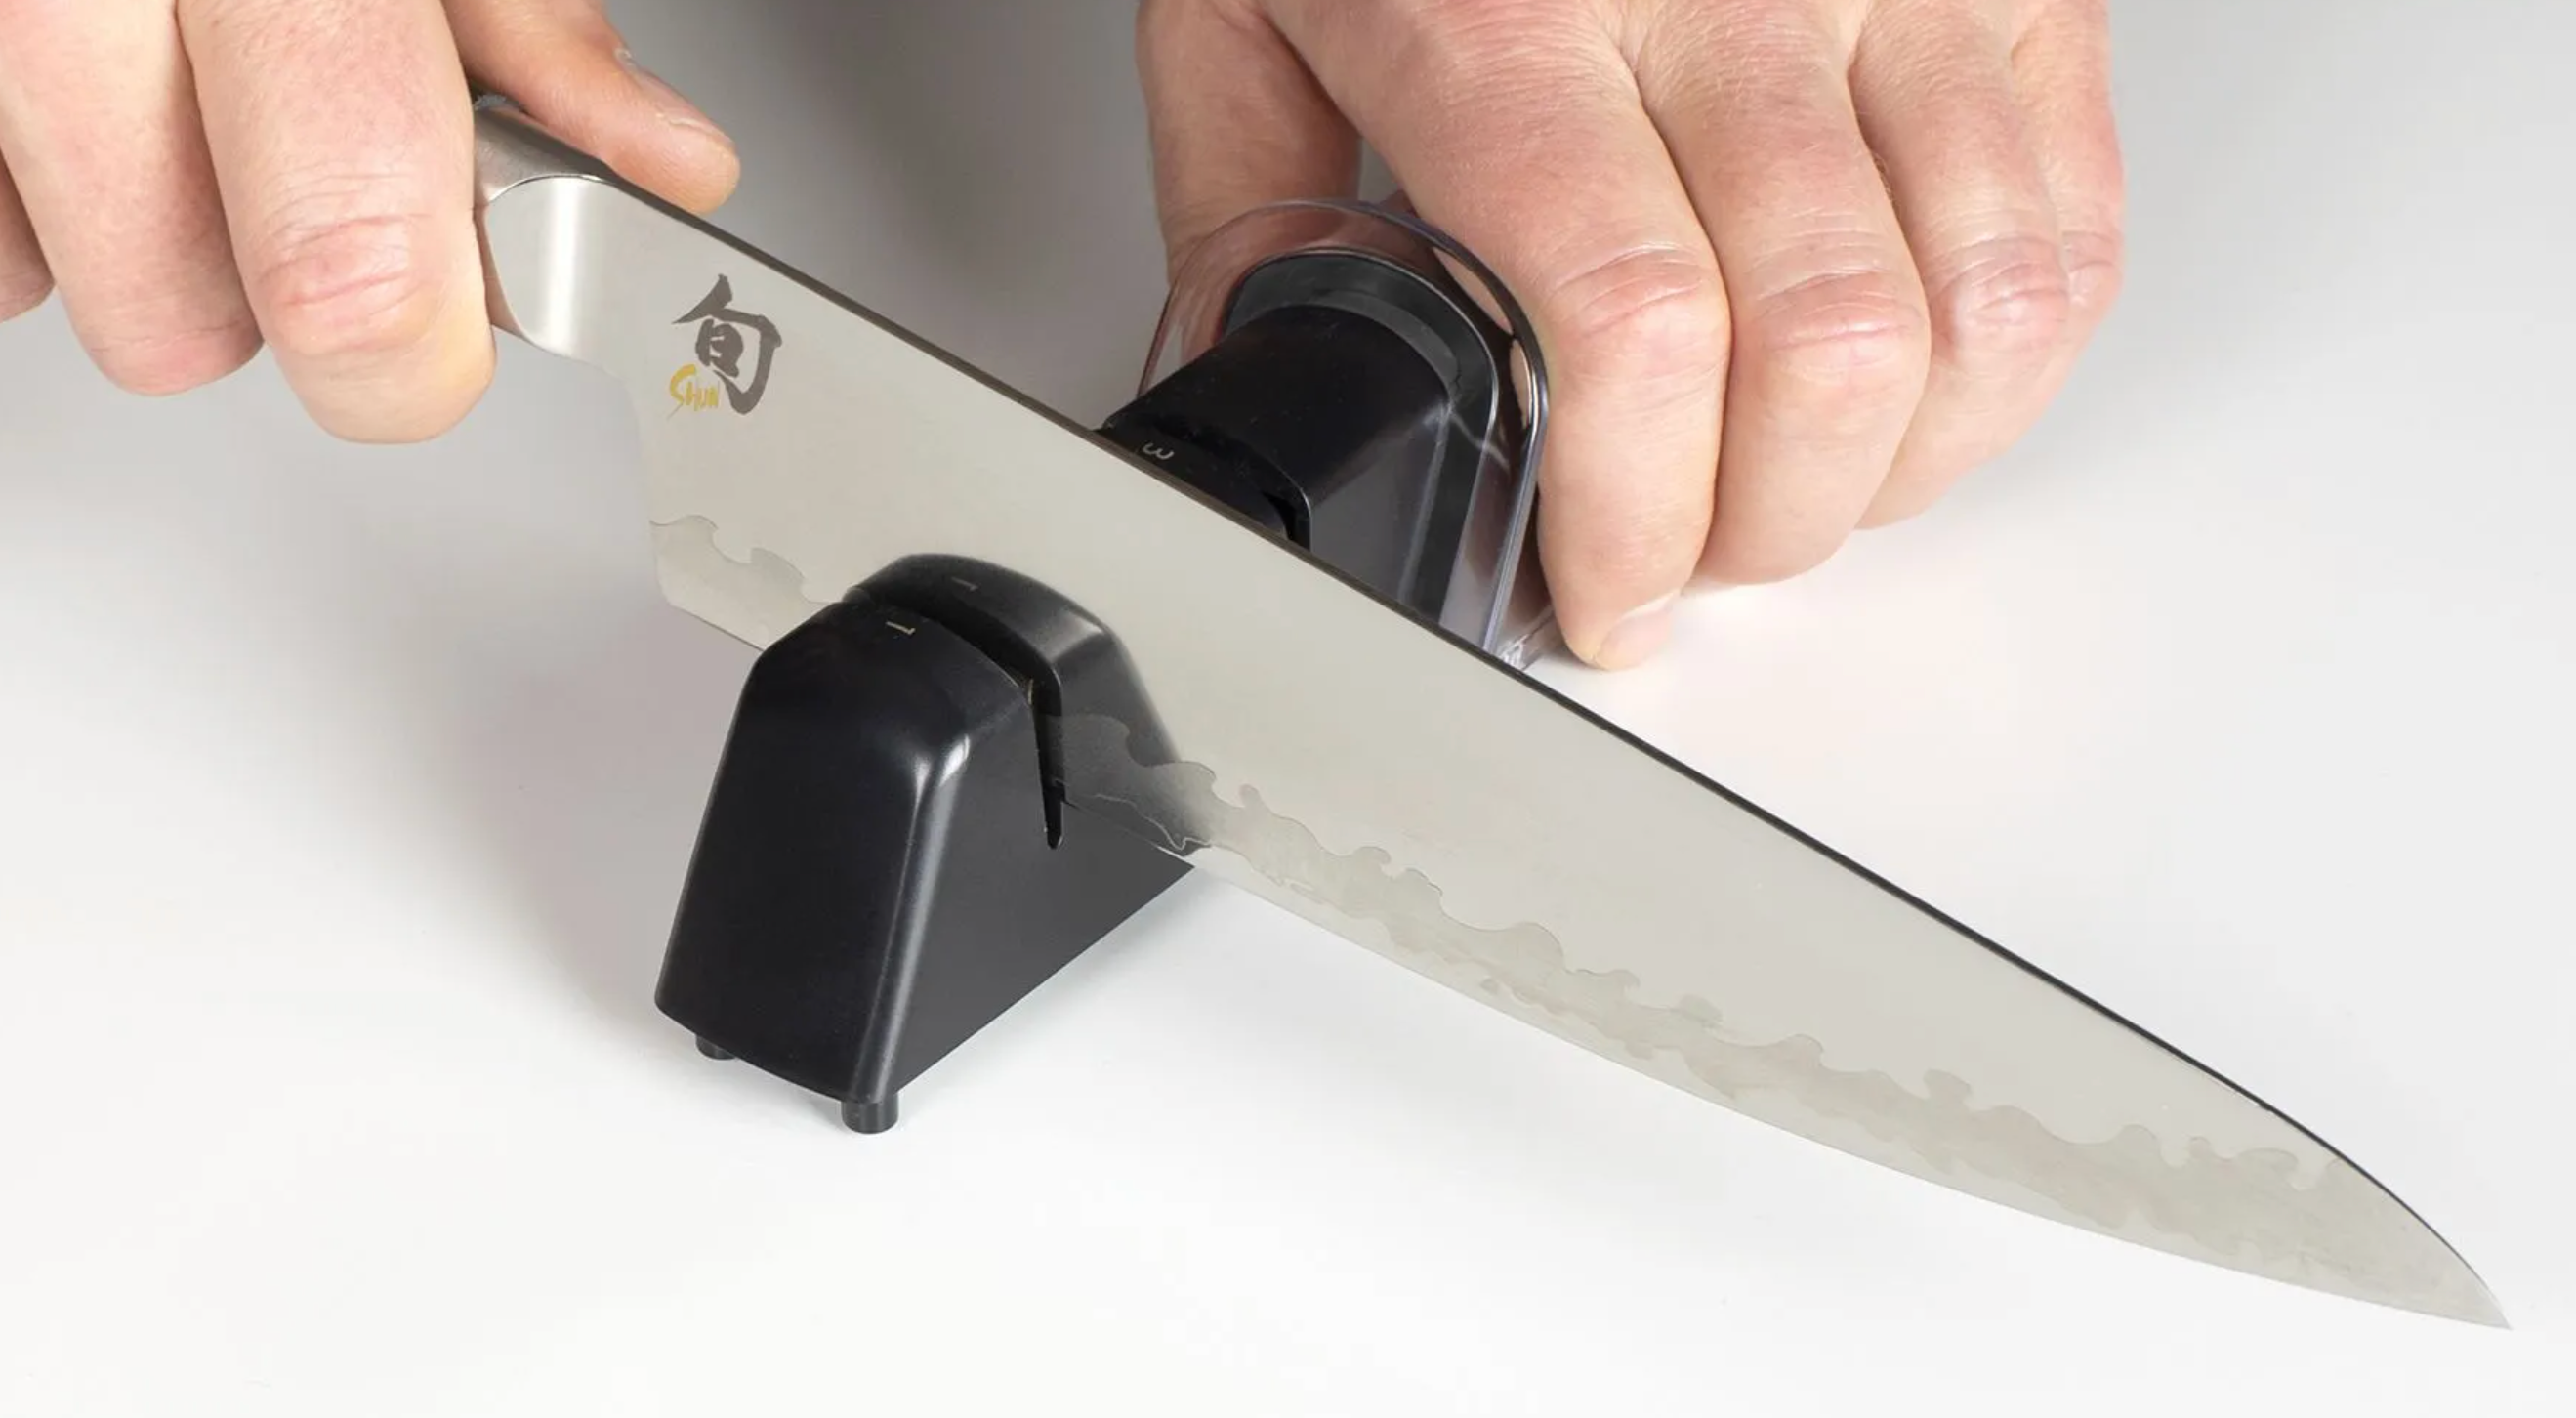 Miyabi sharpener diamond / ceramic - Buy Knives and Knife